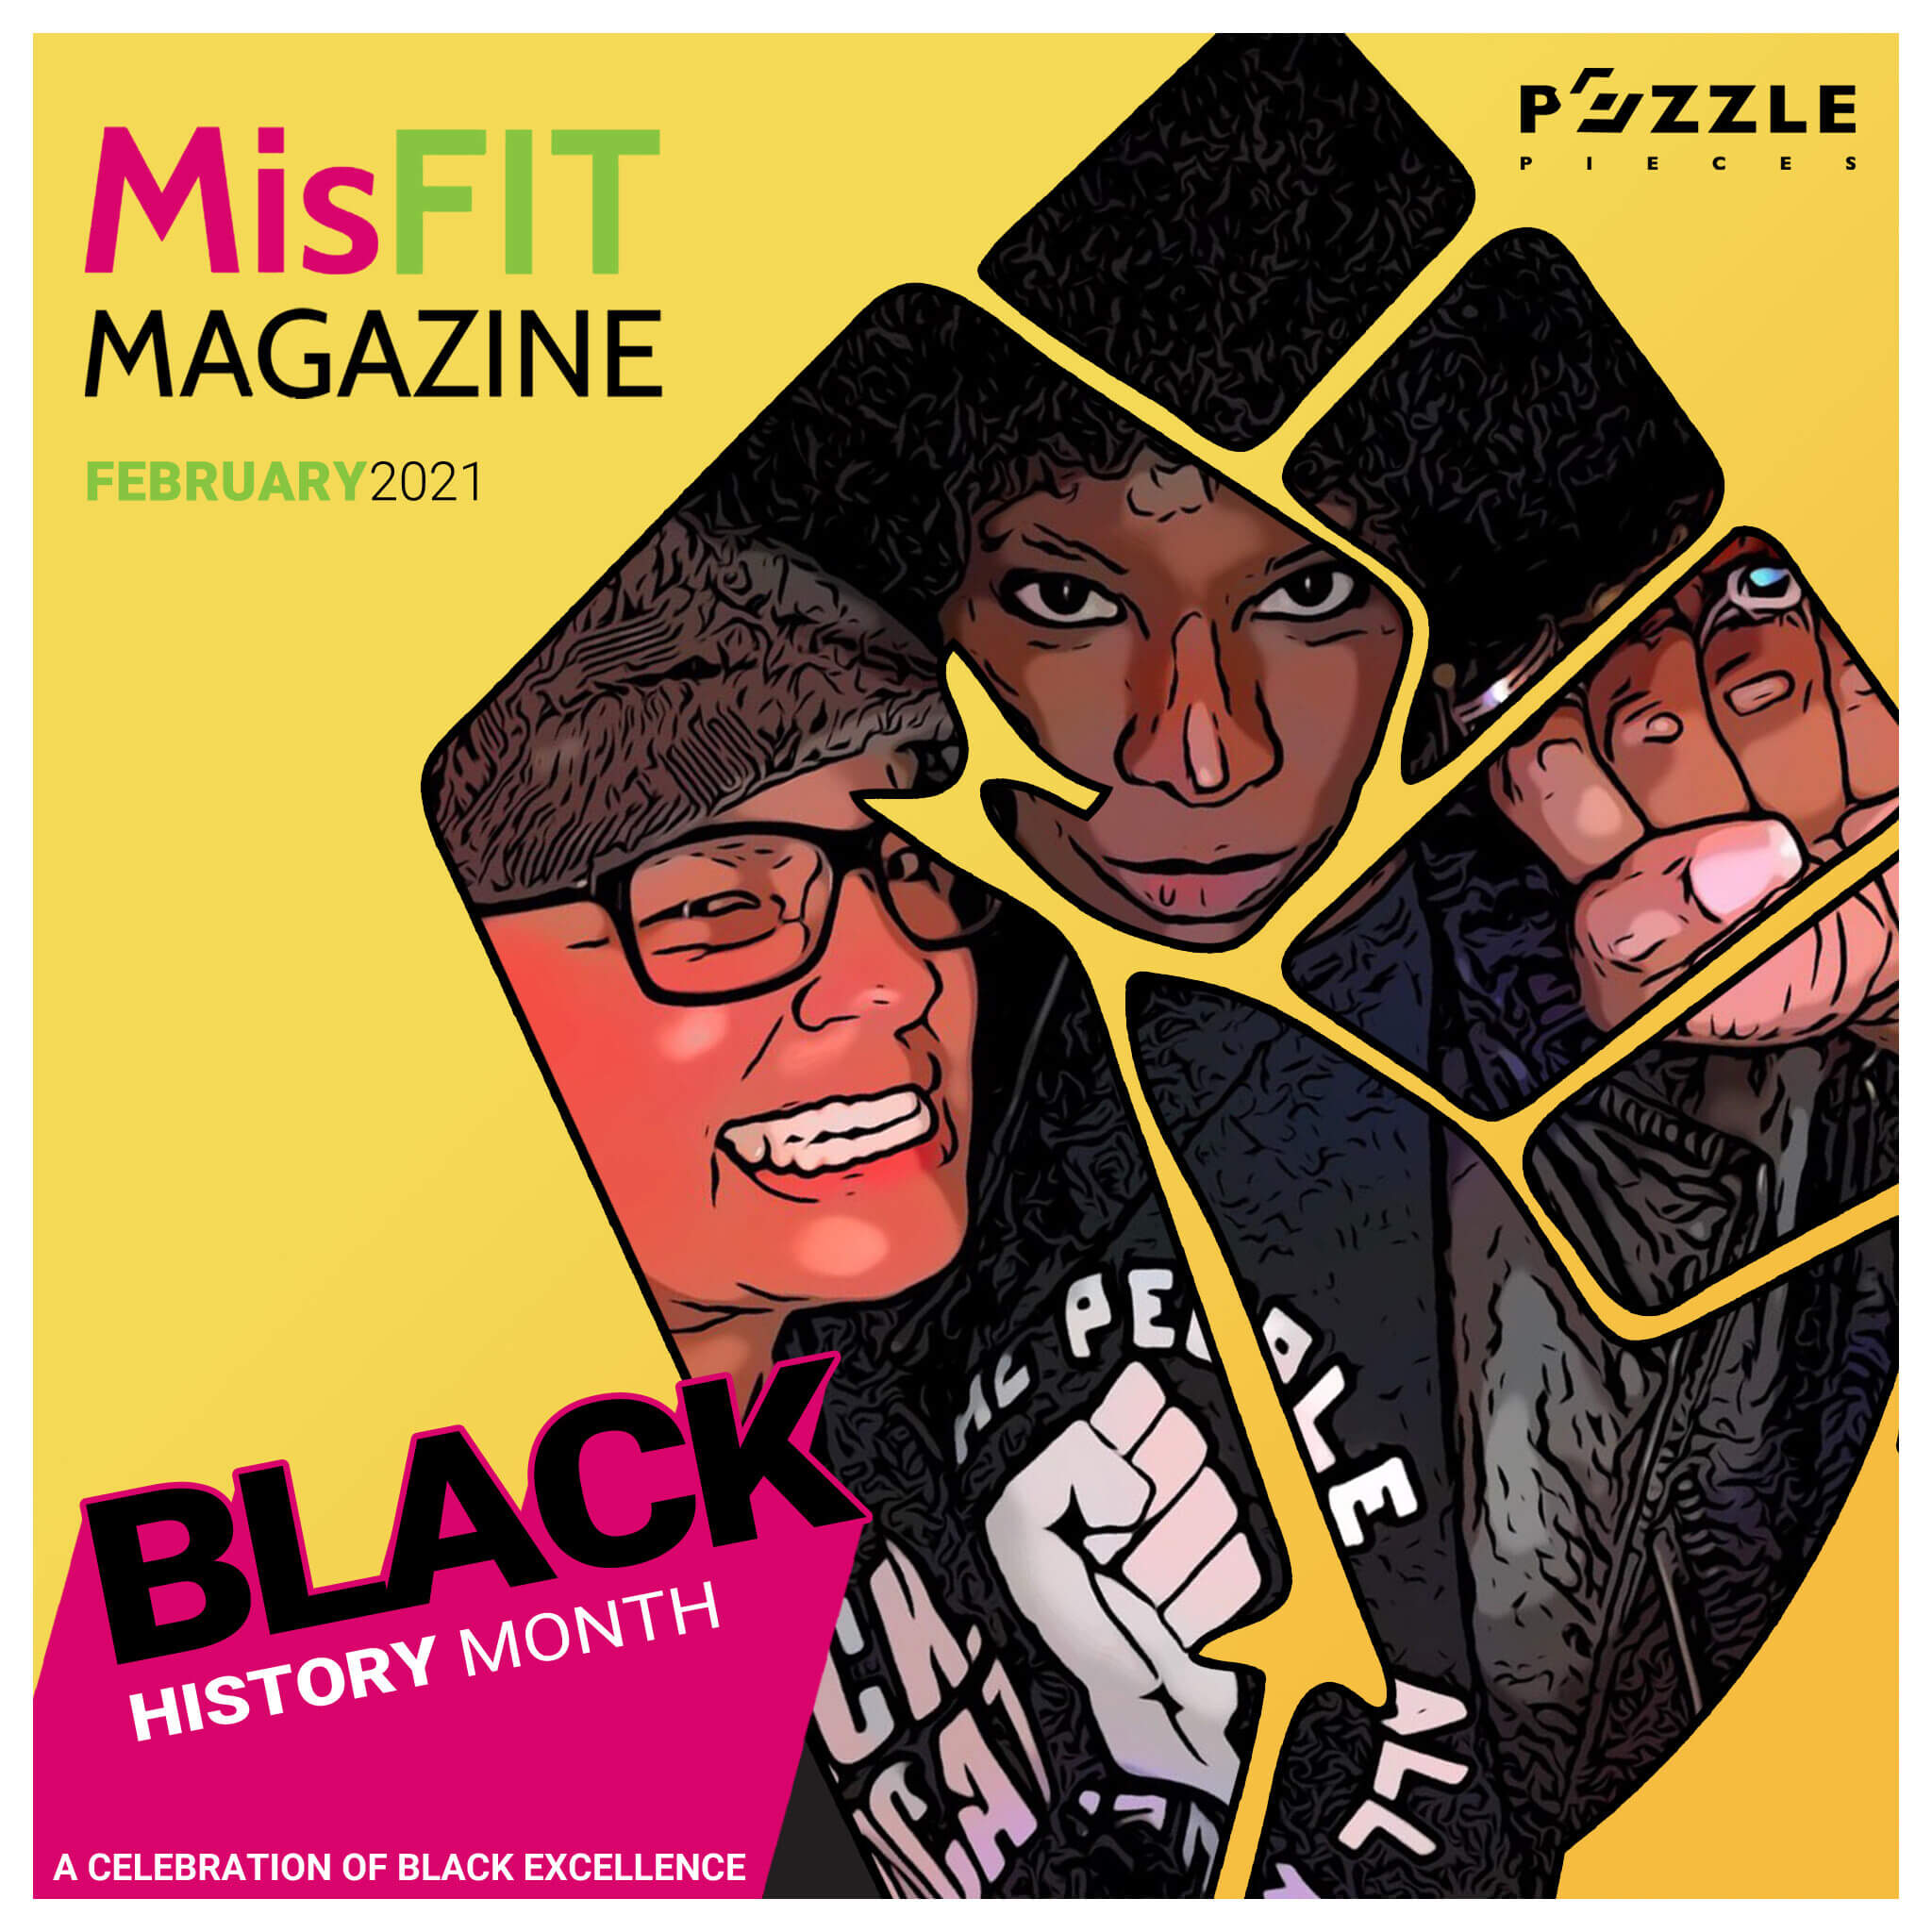 Puzzle Pieces Marketing MisFit MagazineBlack History Month Cover